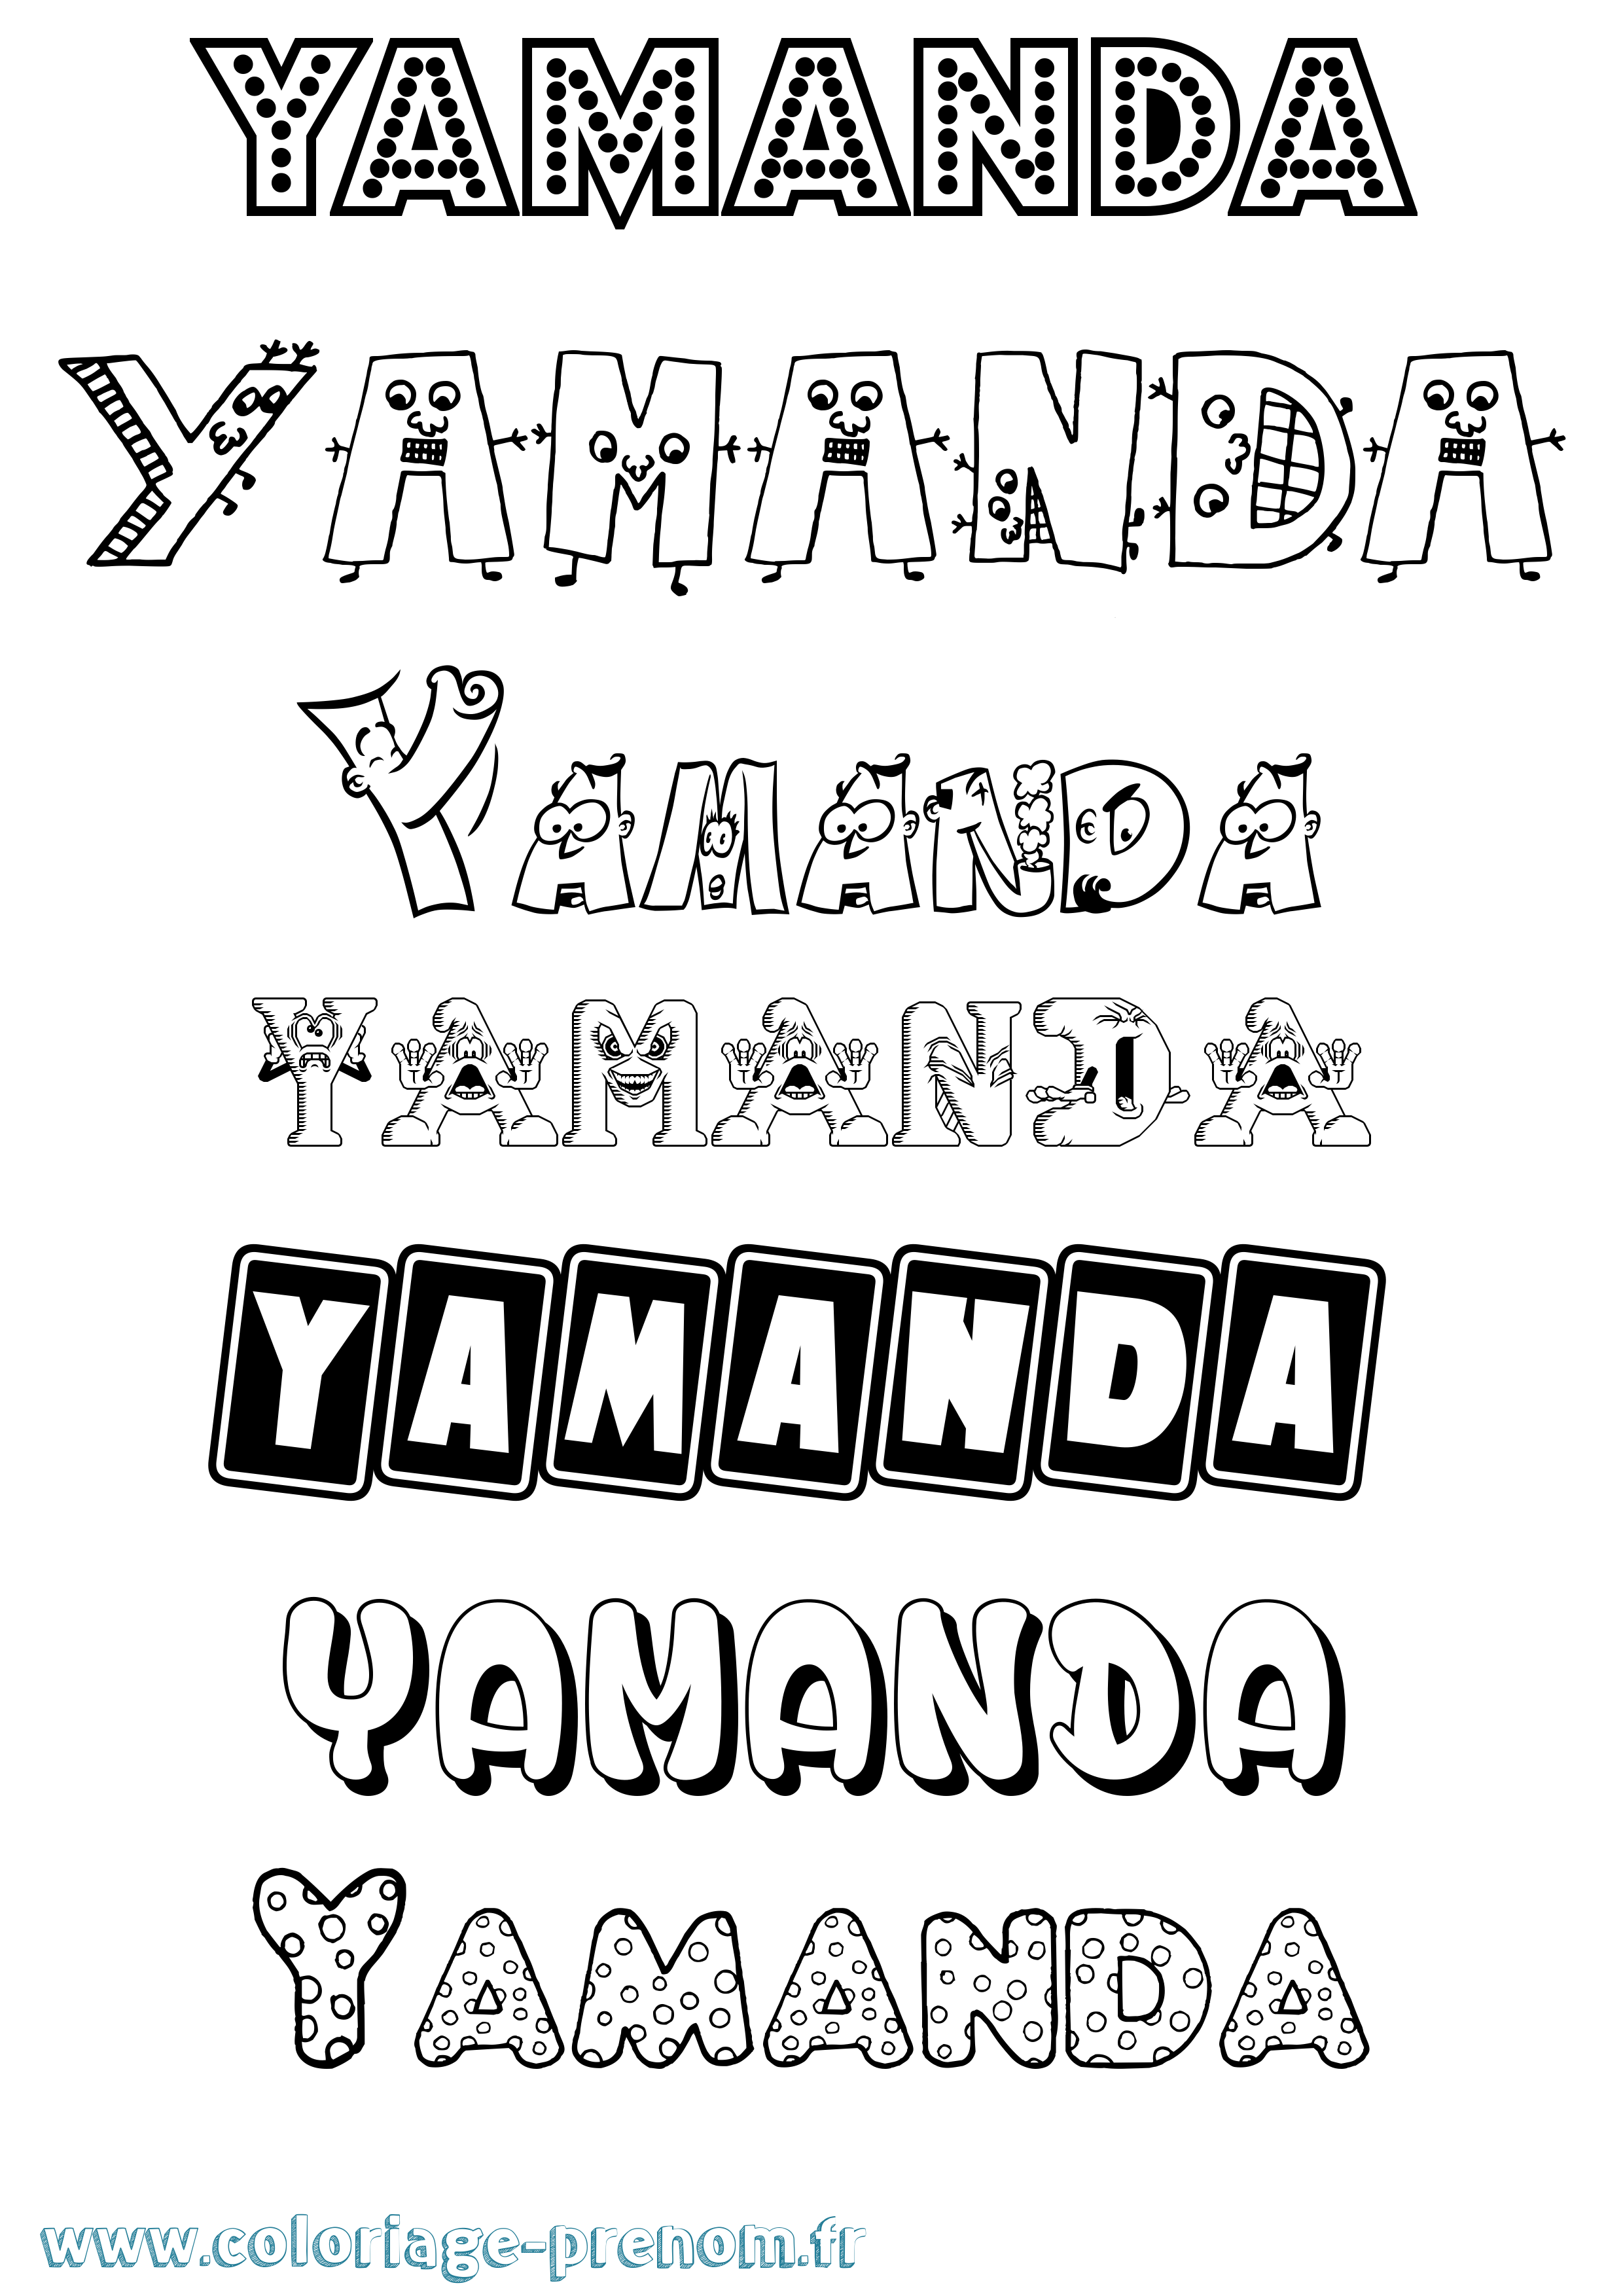 Coloriage prénom Yamanda Fun